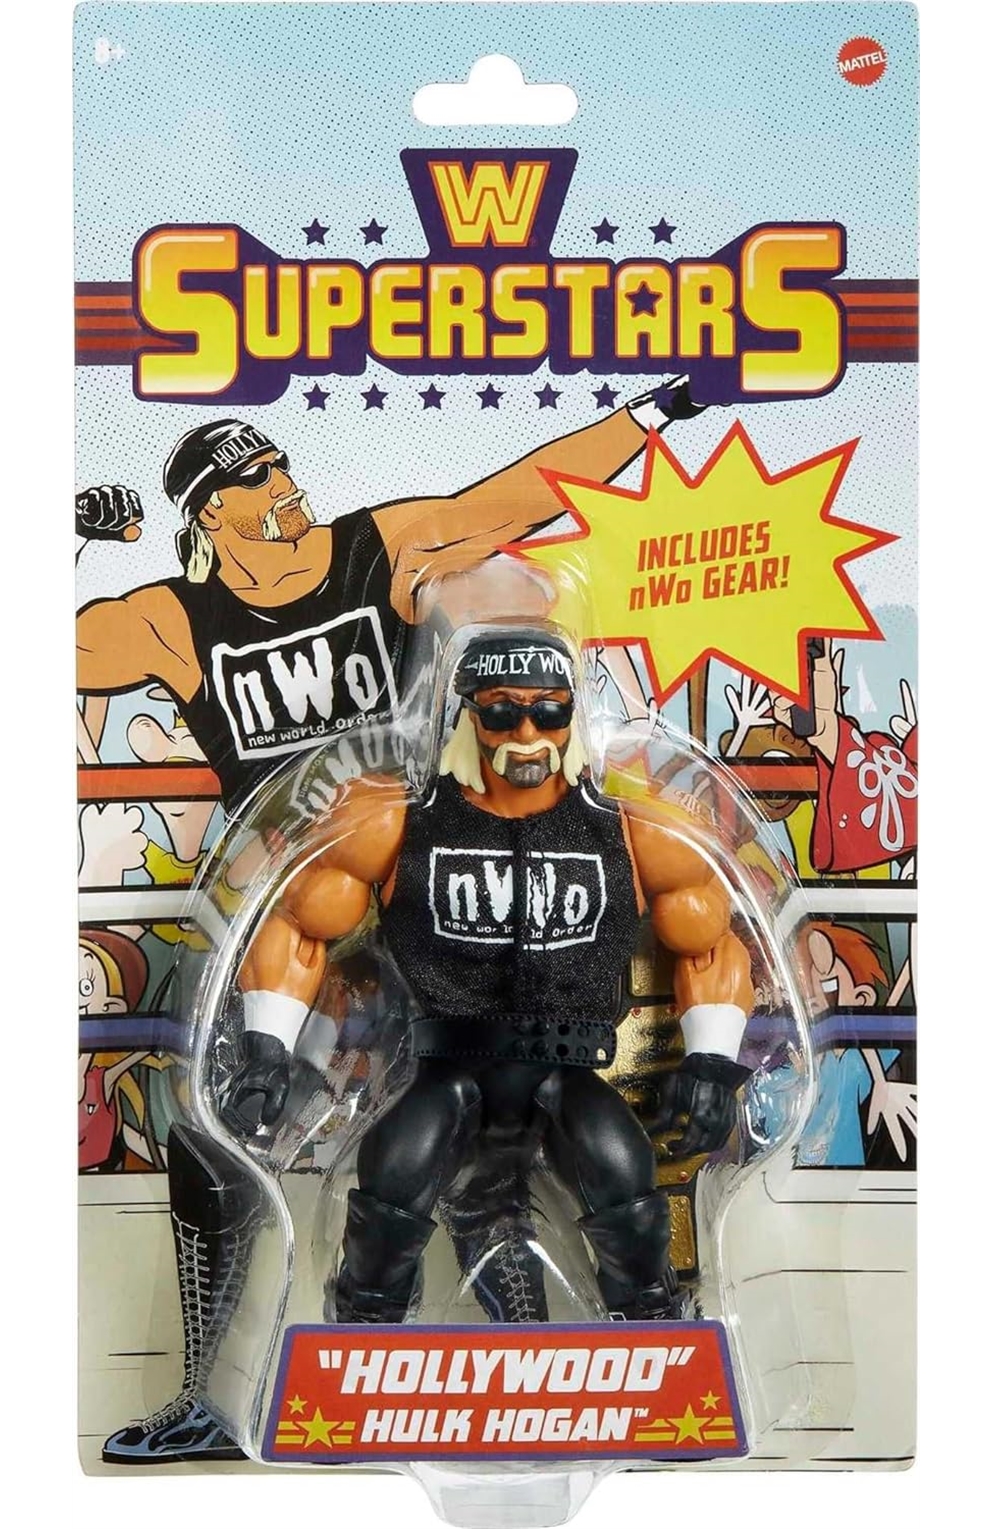 Wwe Superstars “Hollywood” Hulk Hogan 5-Inch Retro Action Figure